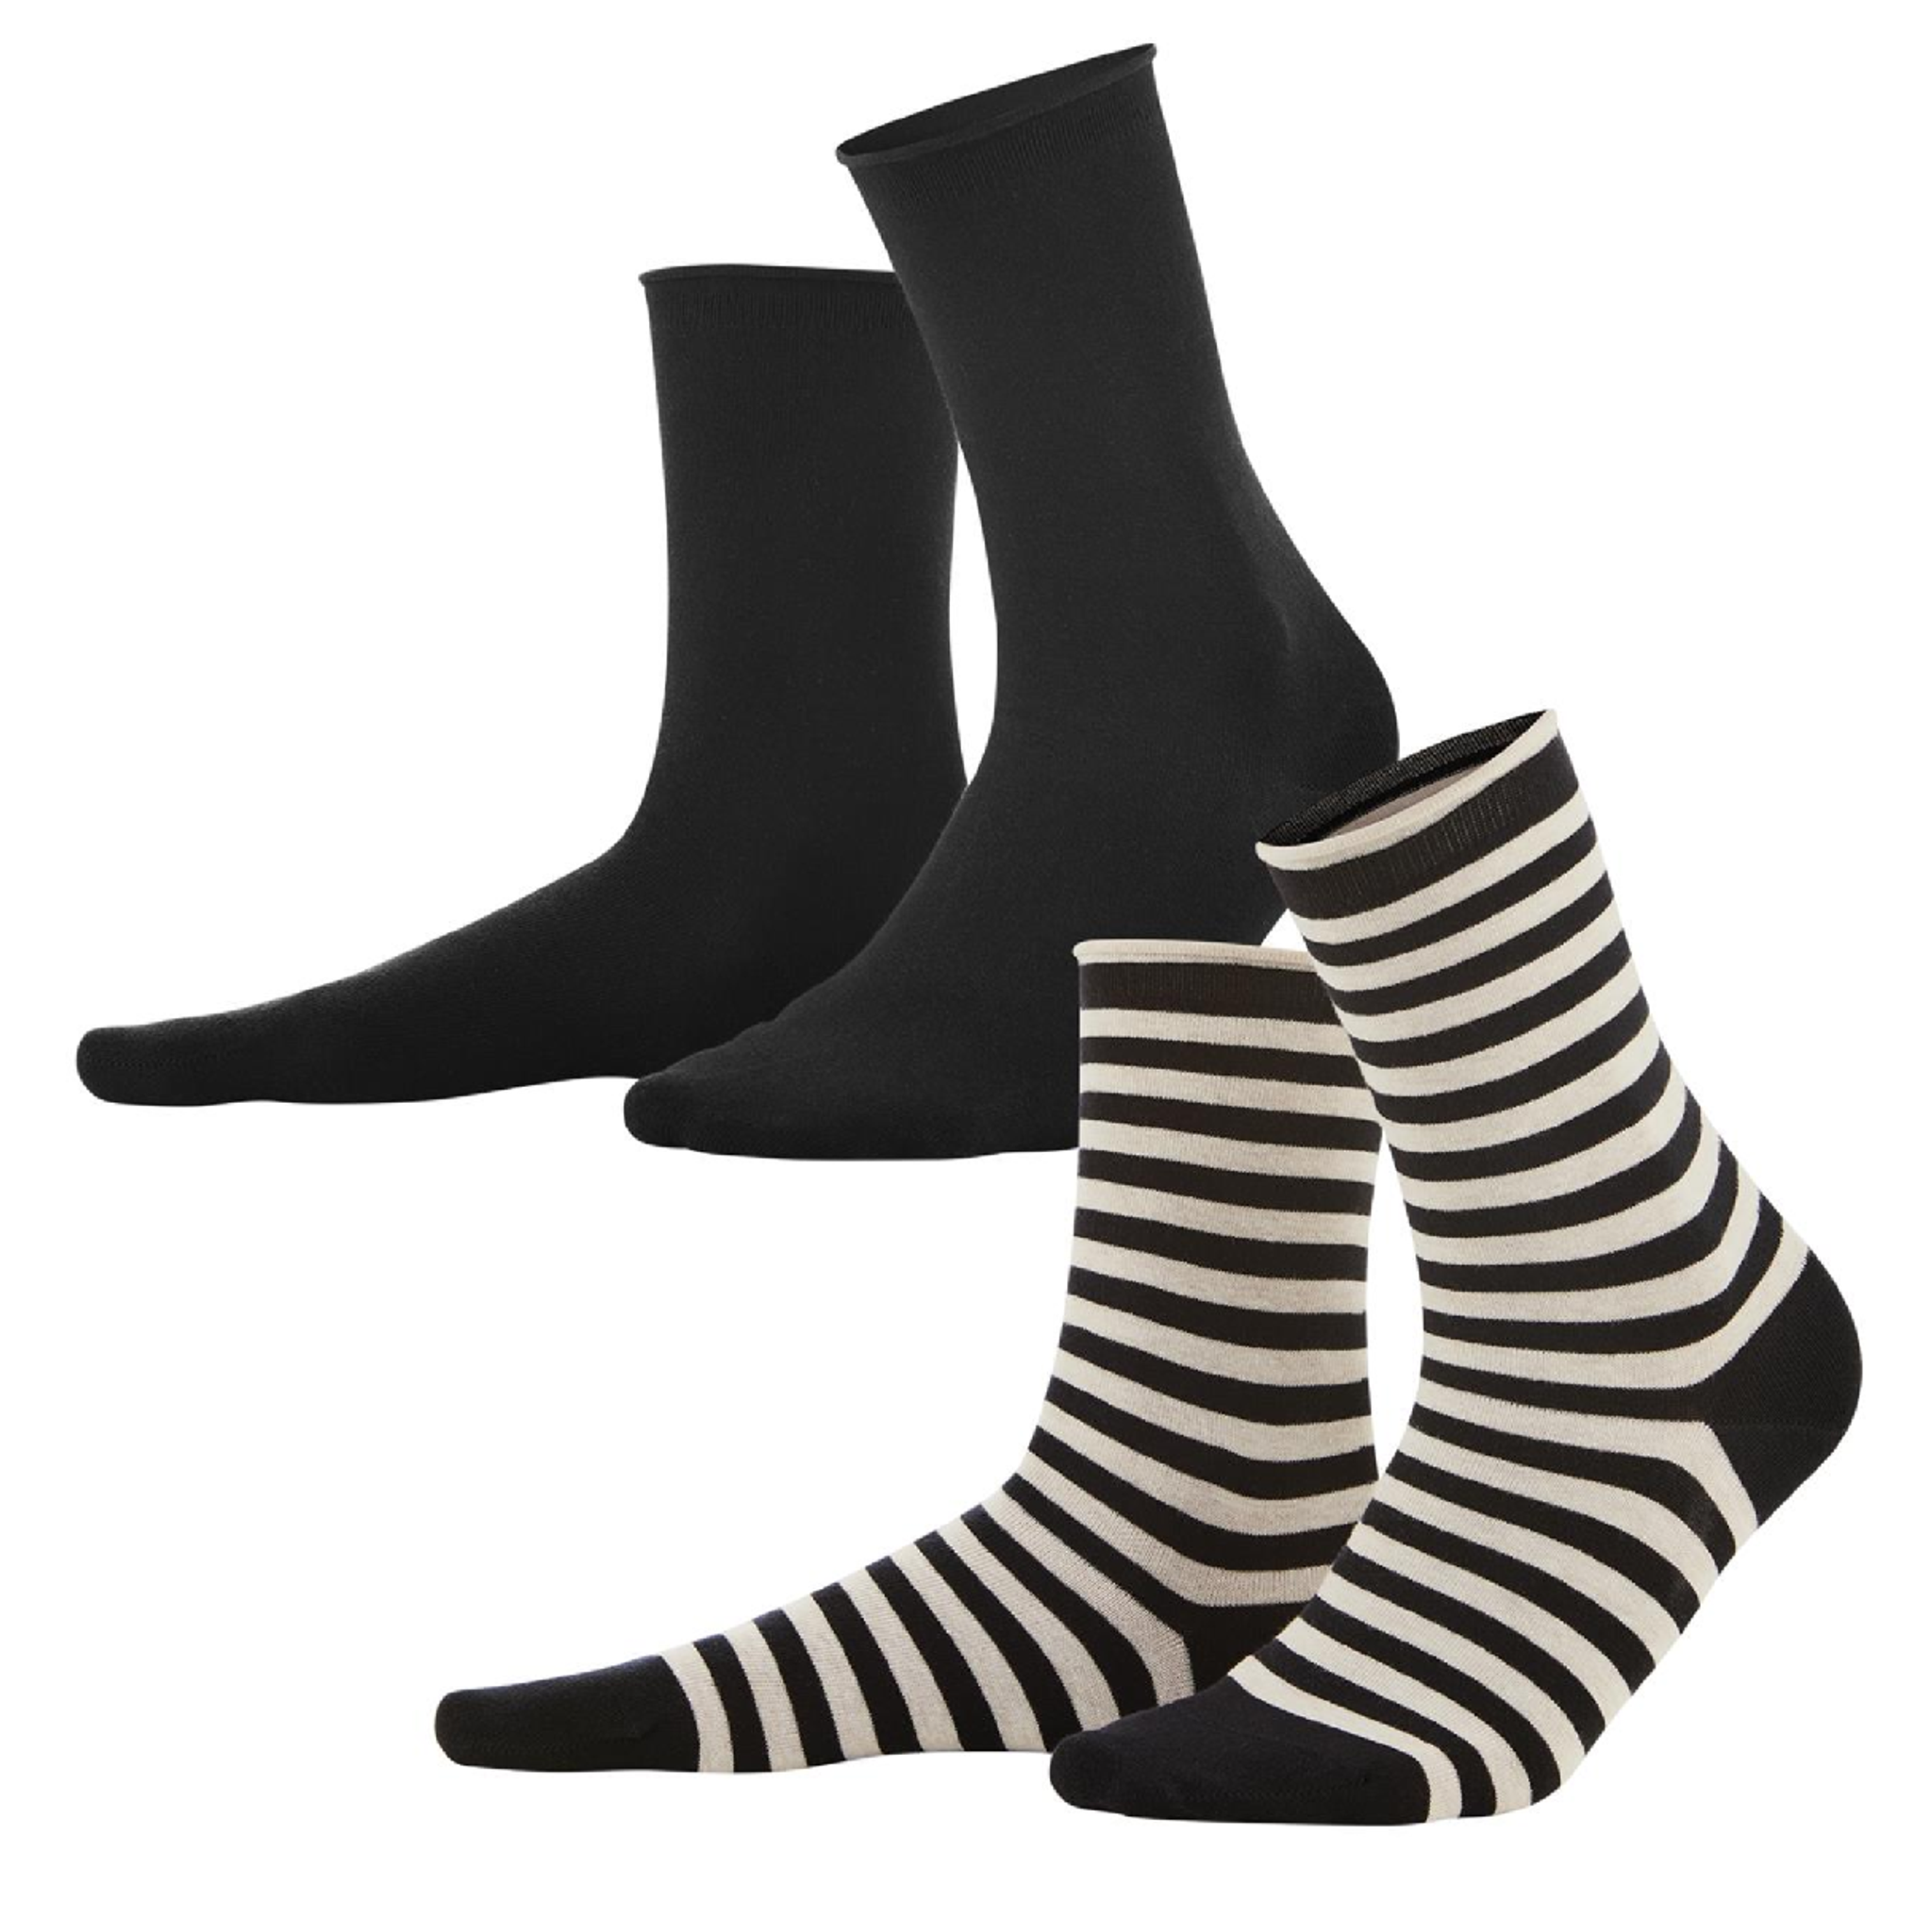 Ladies Cotton Thick Socks 2 Pack - BW736 